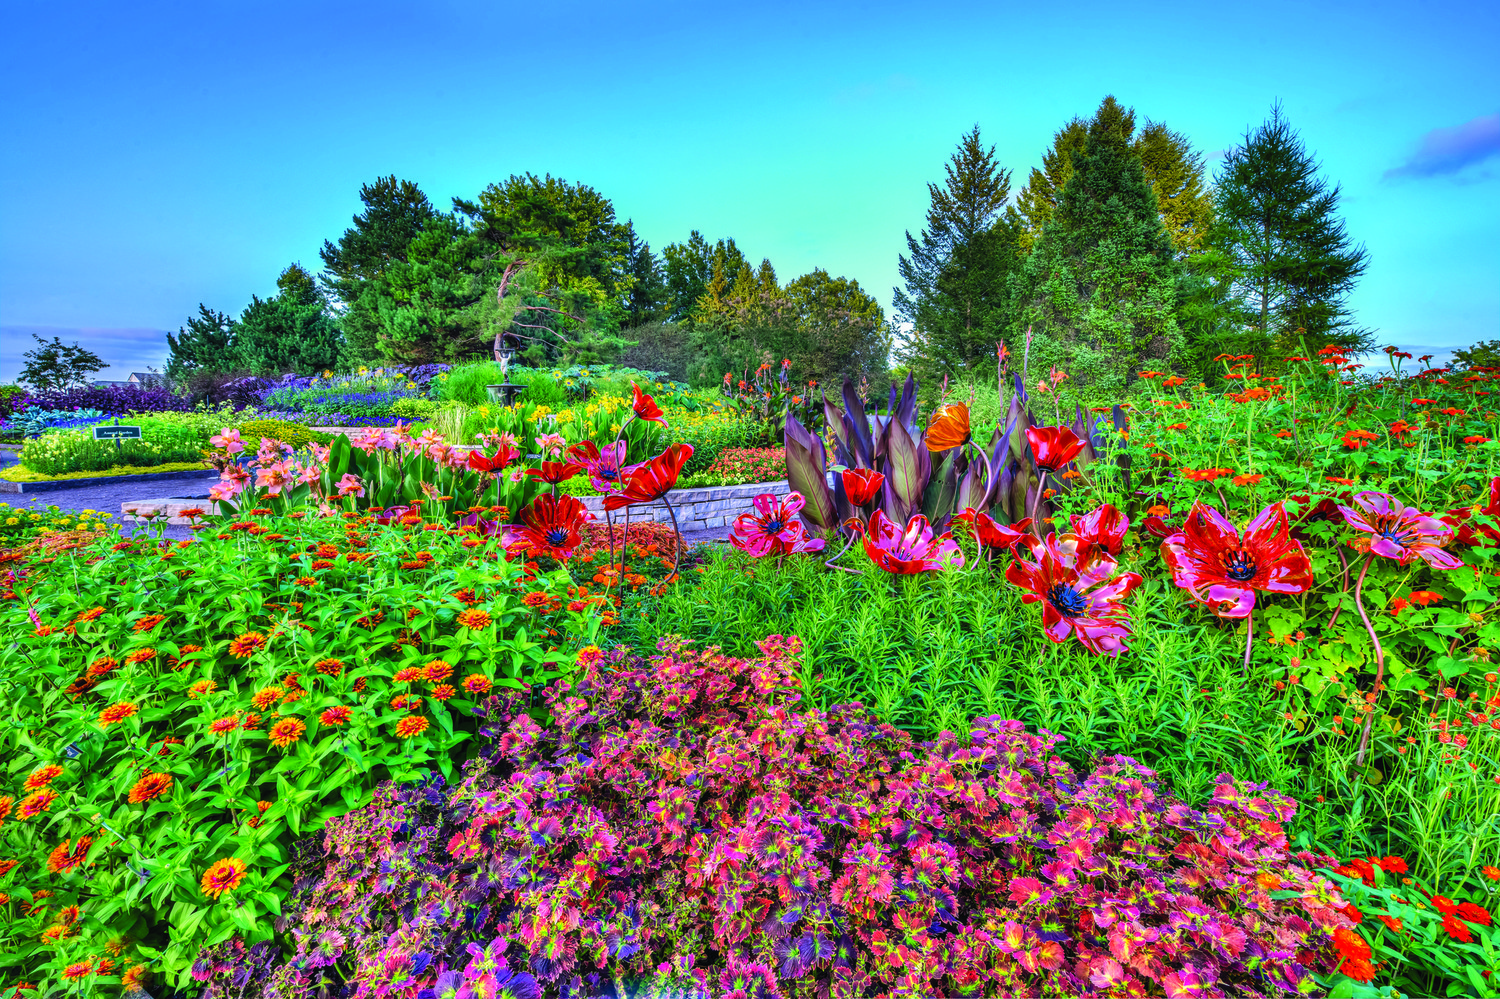 Image of flowers in bloom at the Minnesota Landscape Arboretum